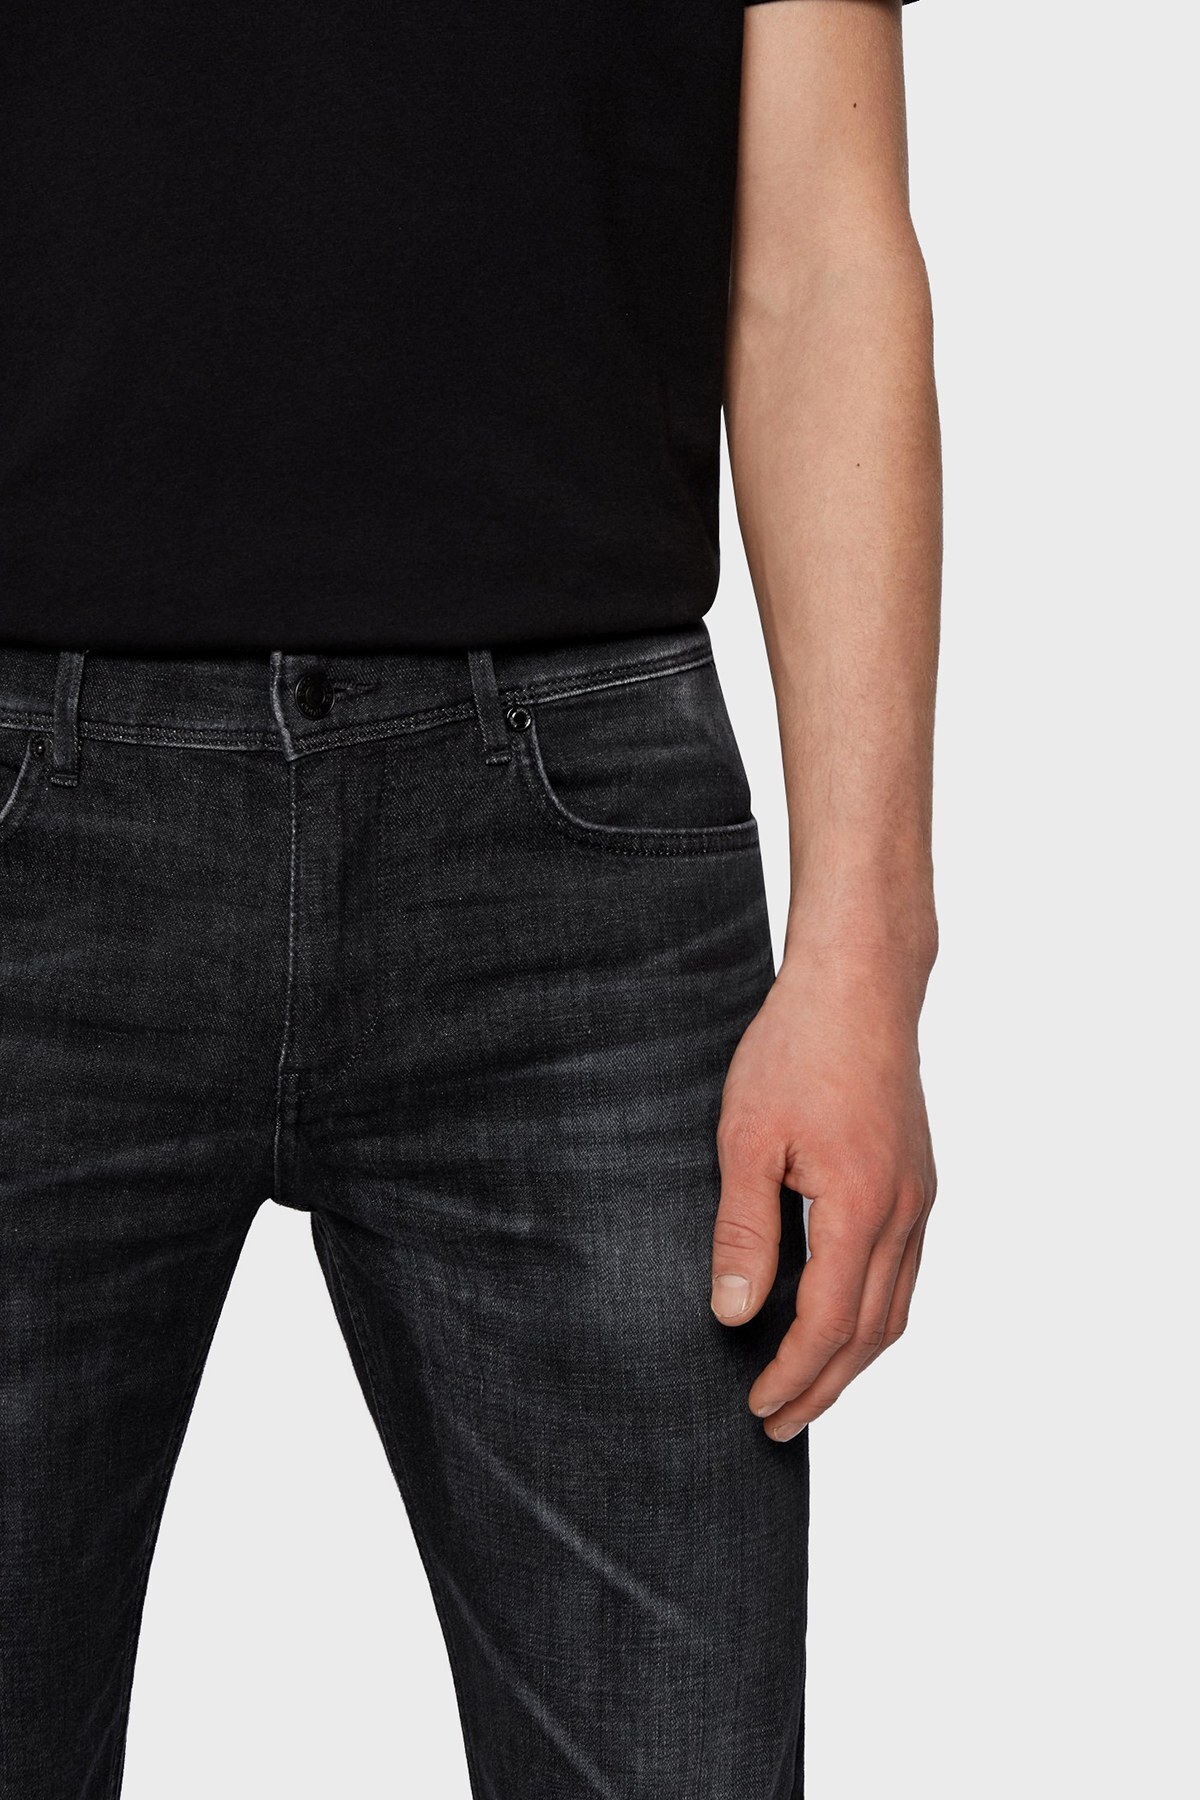 Hugo Boss Extra Slim Fit Düşük Bel Pamuklu Jeans Erkek Kot Pantolon 50453109 003 SİYAH